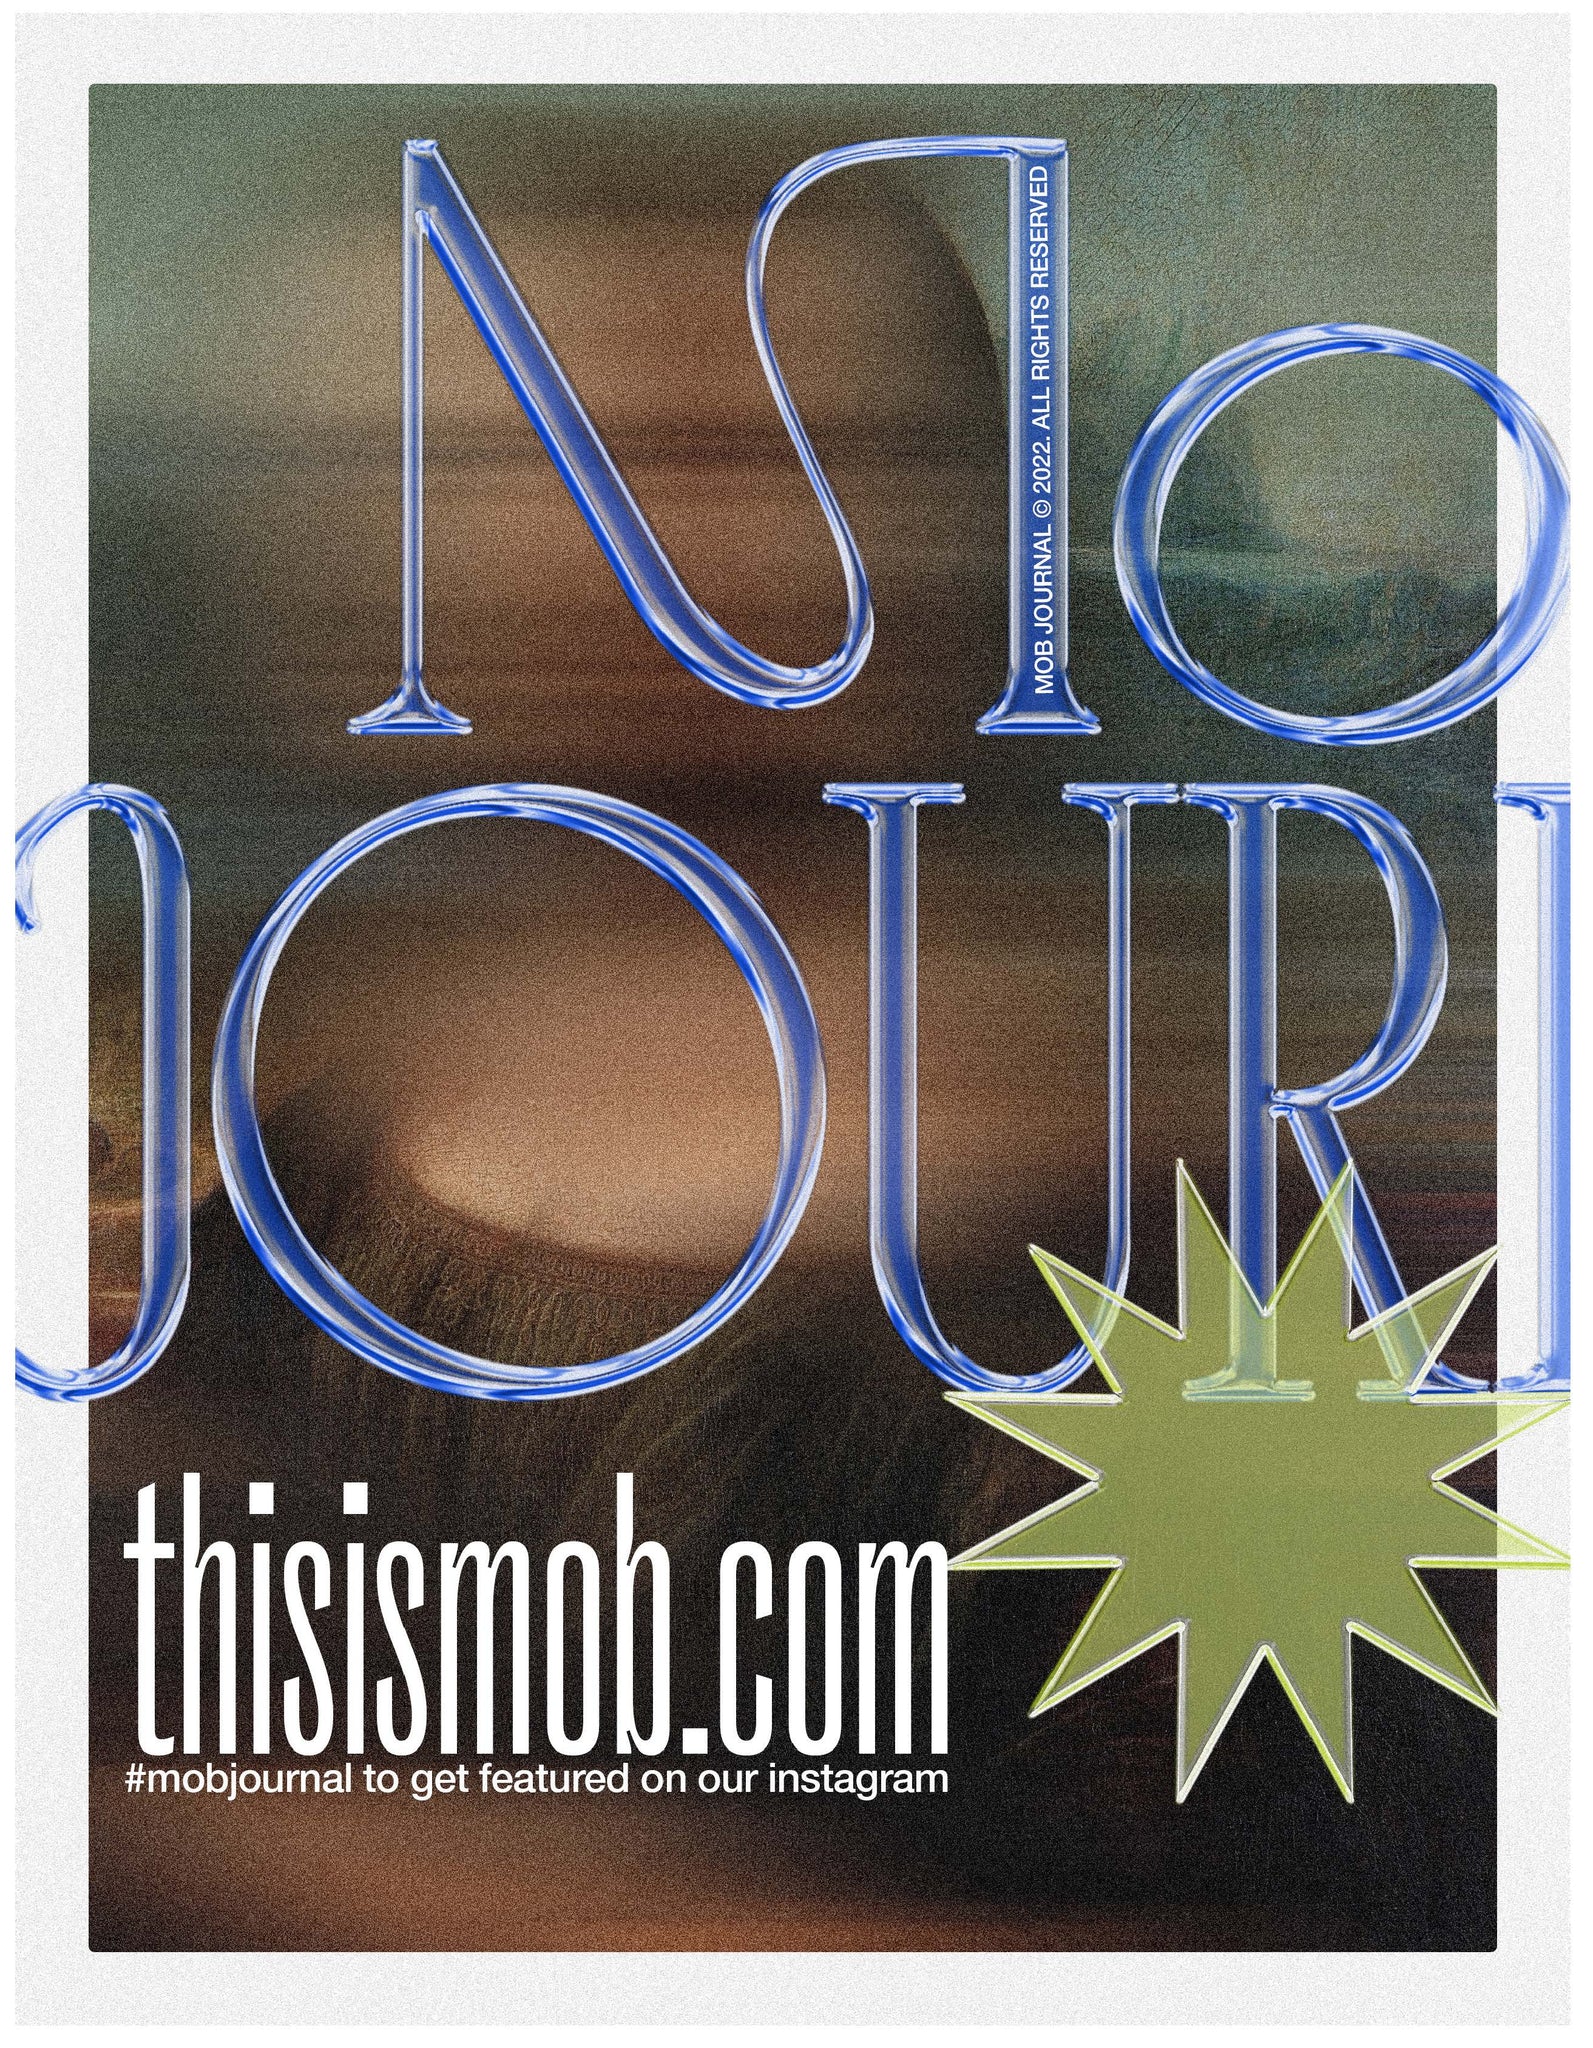 MOB JOURNAL | VOLUME THIRTY NINE| ISSUE #45